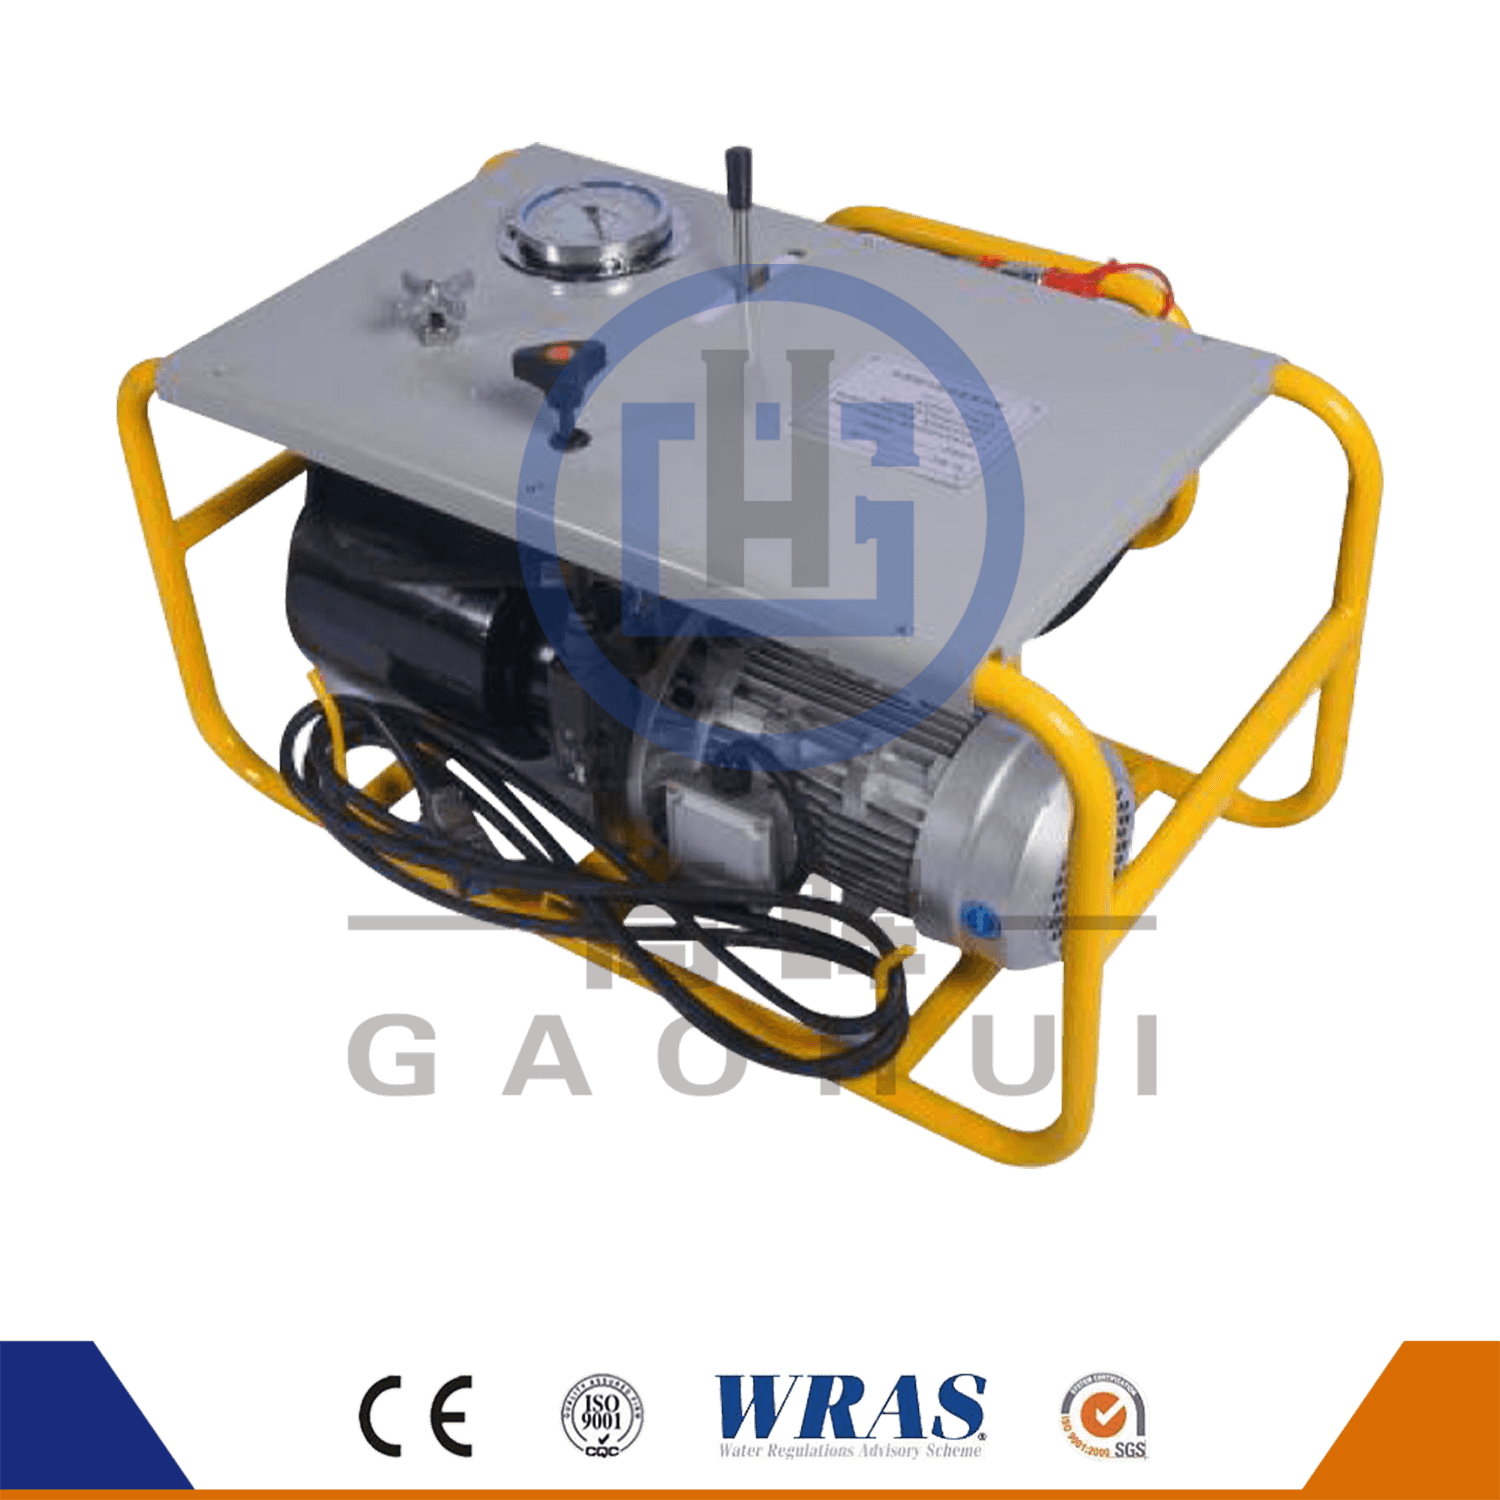 1200 Hydraulic semi-automatic butt fusion welding machine